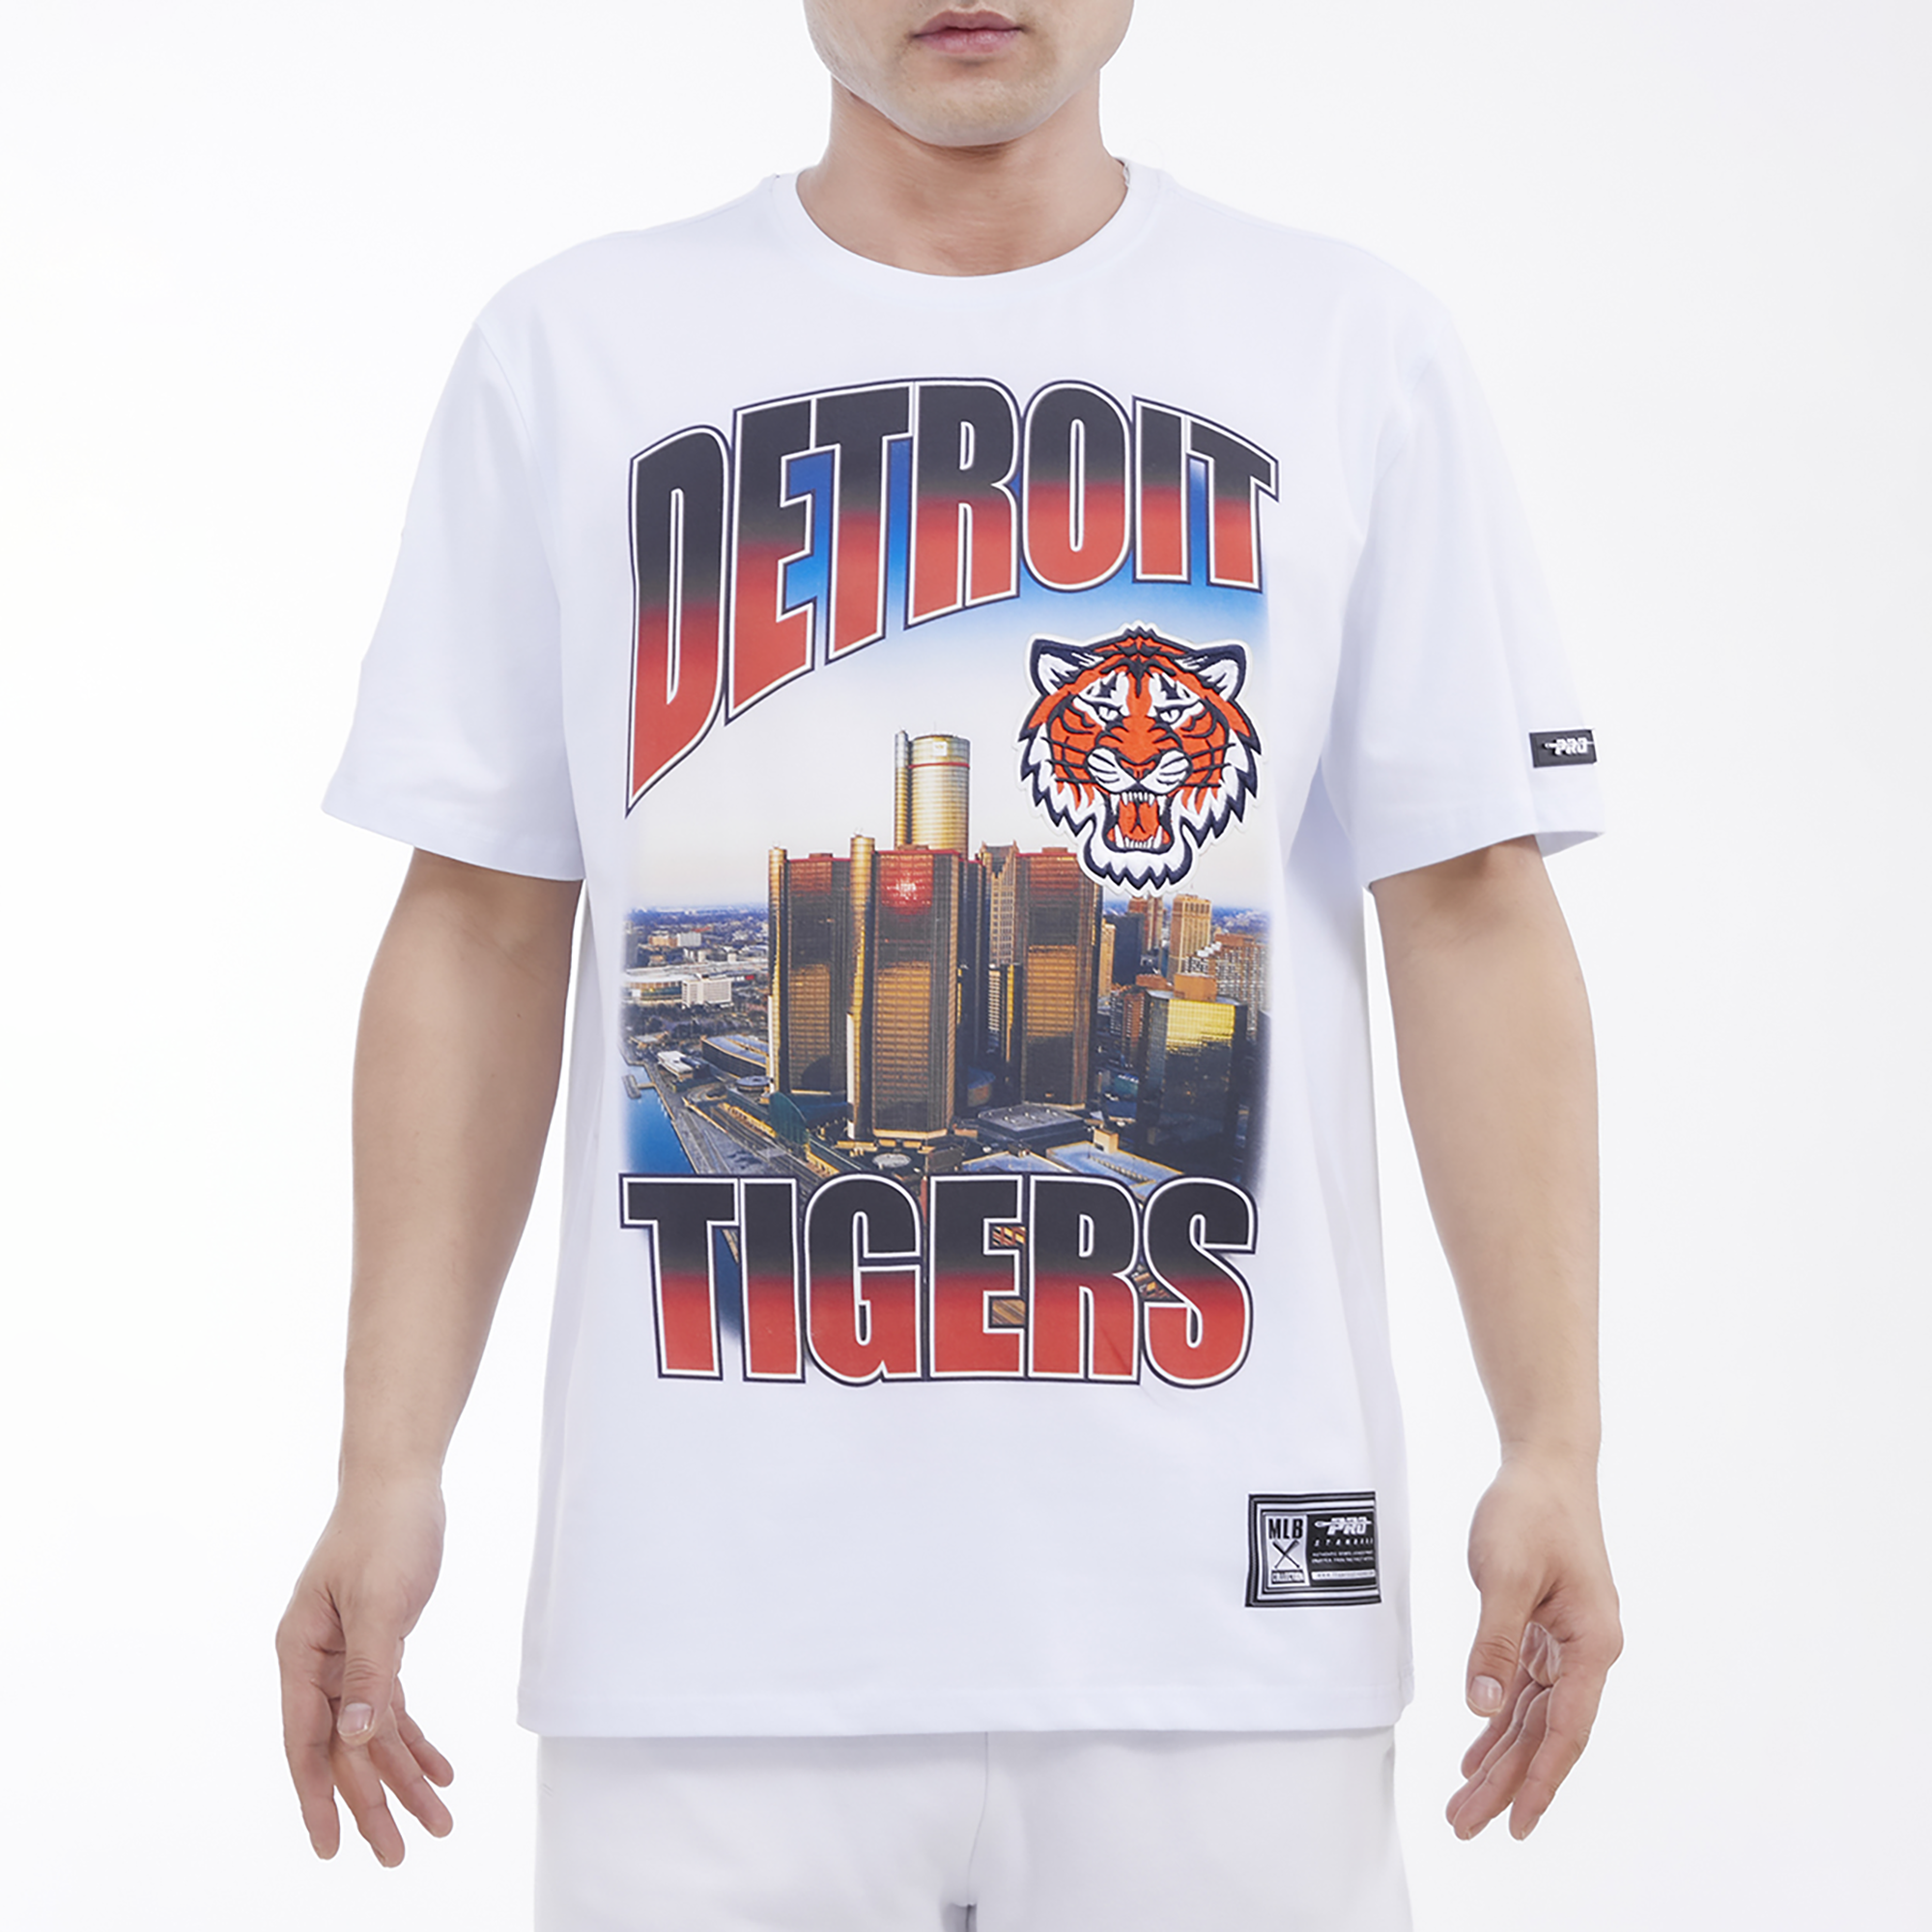 Vintage Detroit Tigers Tee Shirt